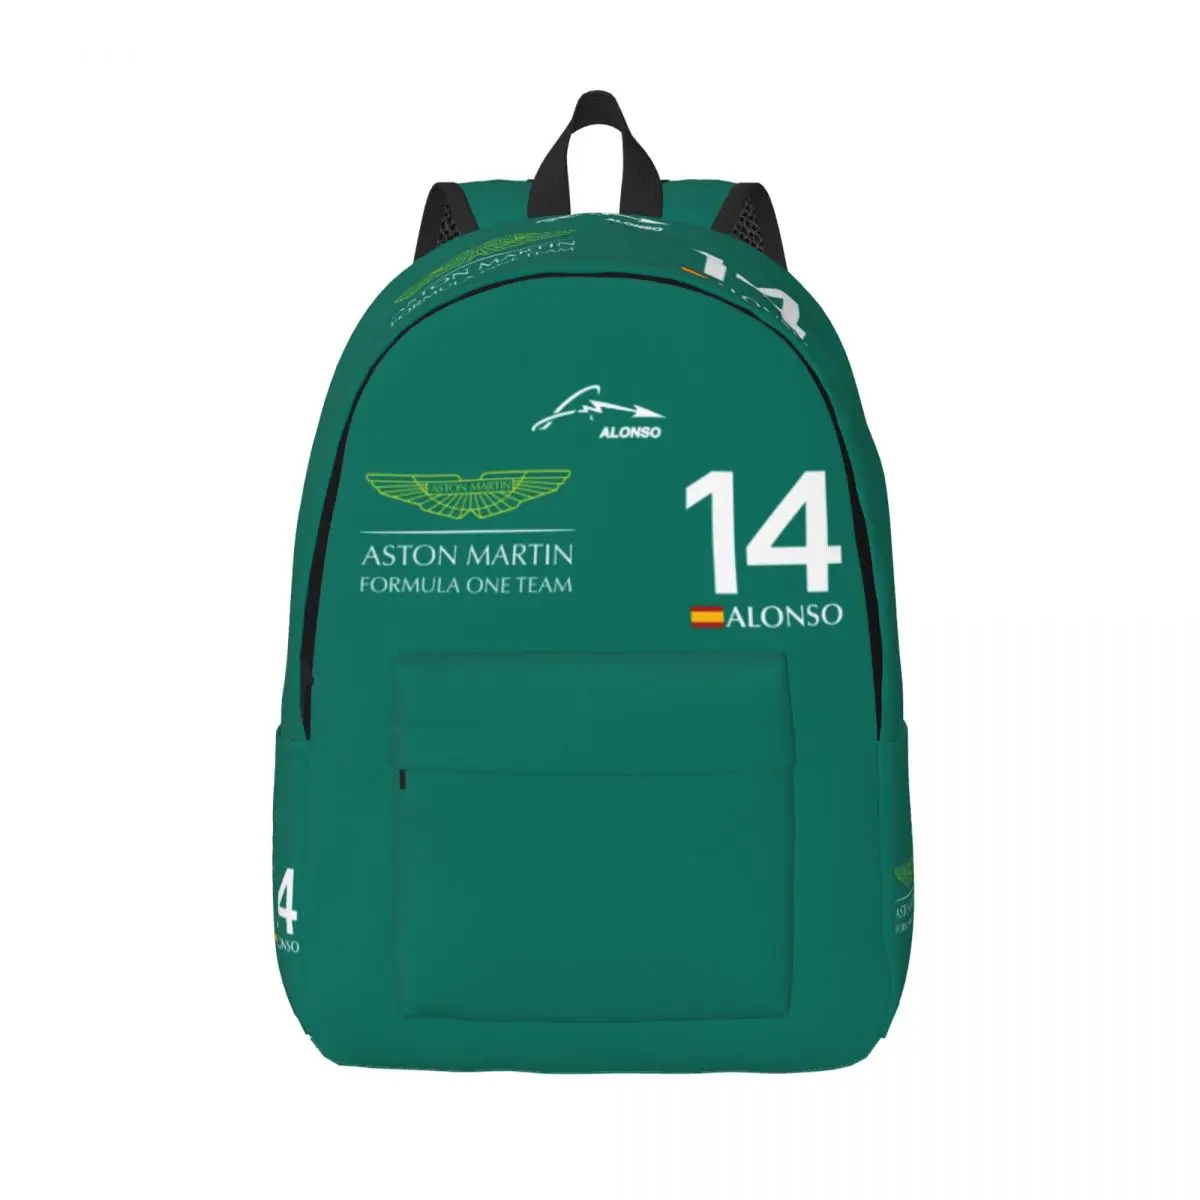 

Fernando Alonso 14 Aston Martin Travel Canvas Backpack Men Women School Laptop Bookbag College Student Daypack Bags